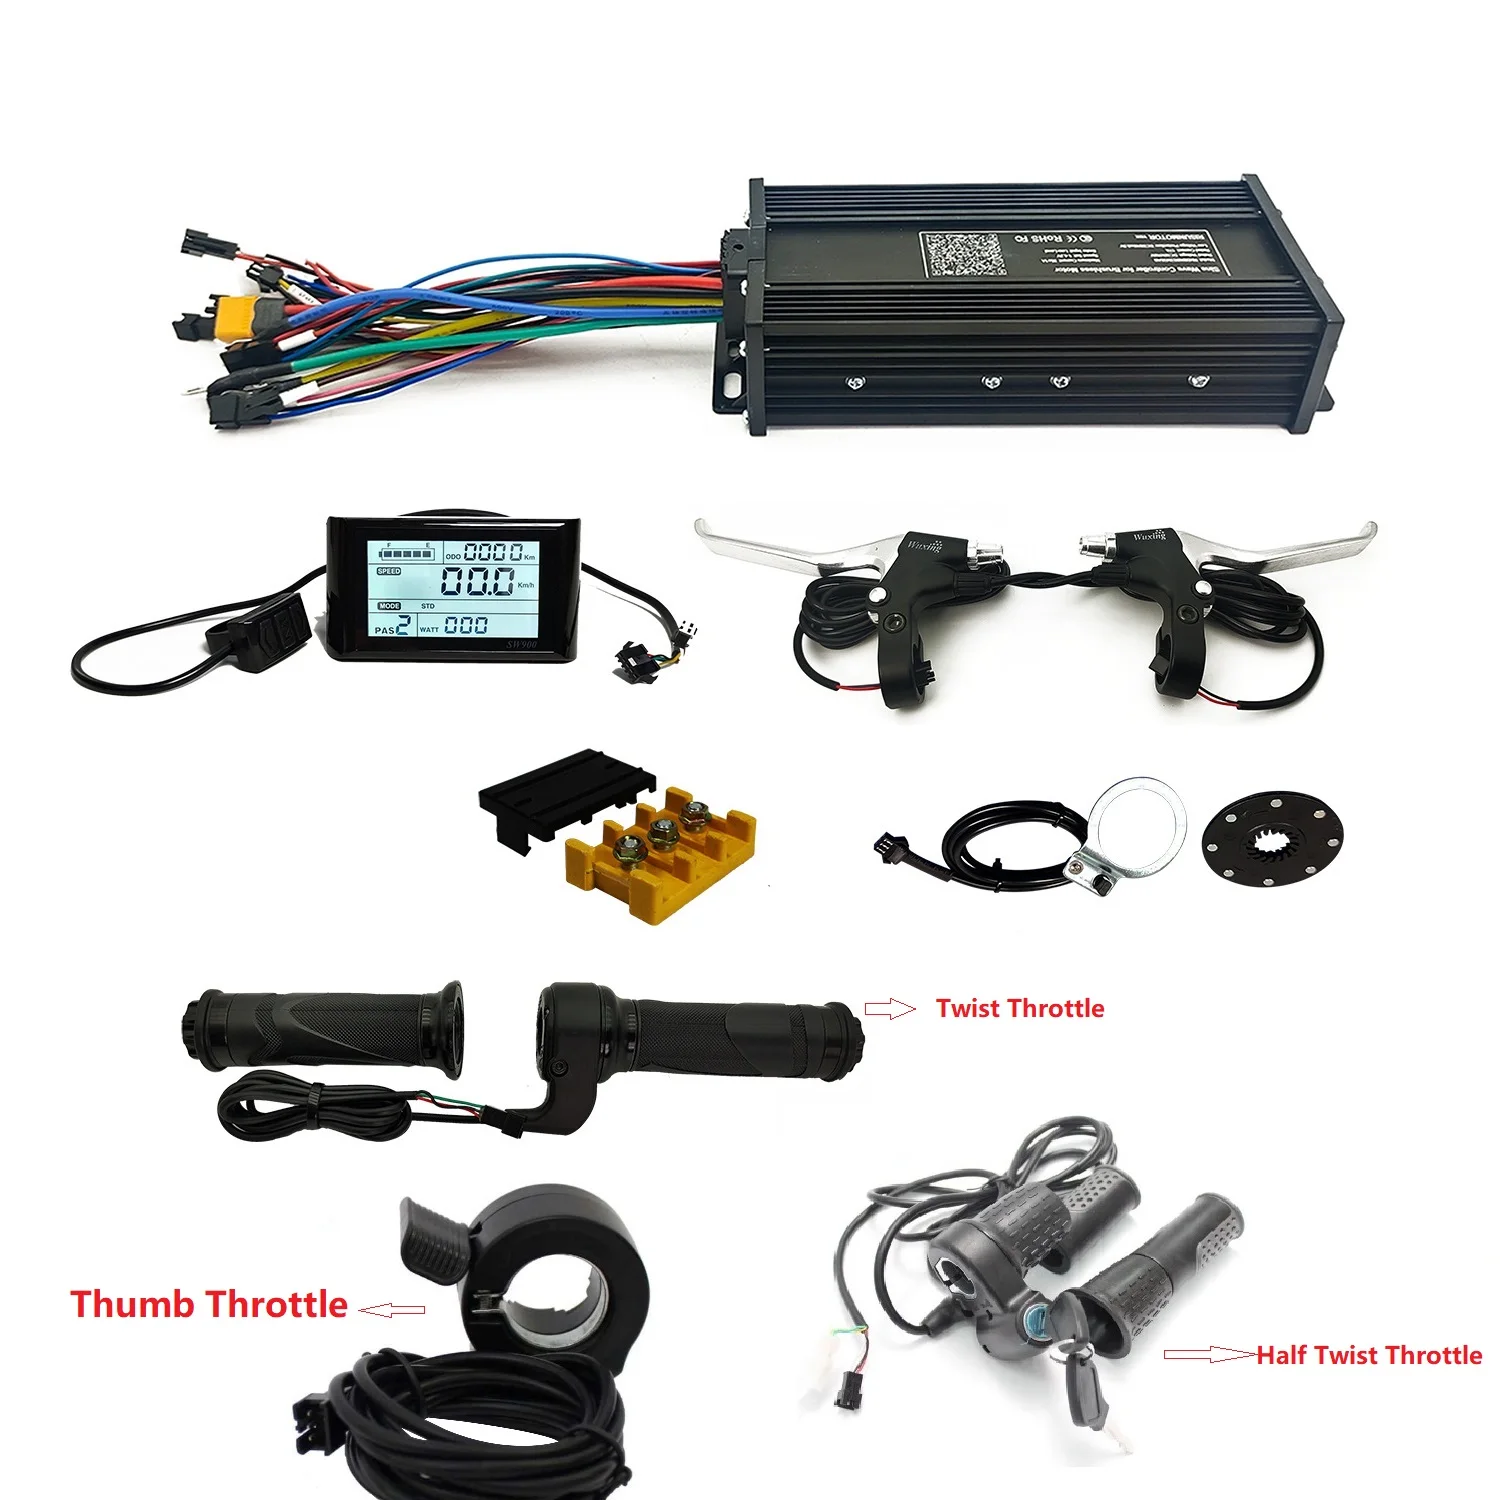 

eBike Control System: 36V-52V 1200W-1800W 45A Sine Wave 3-mode Intelligent Controller with UKC1 Color Display,Throttle, Brake